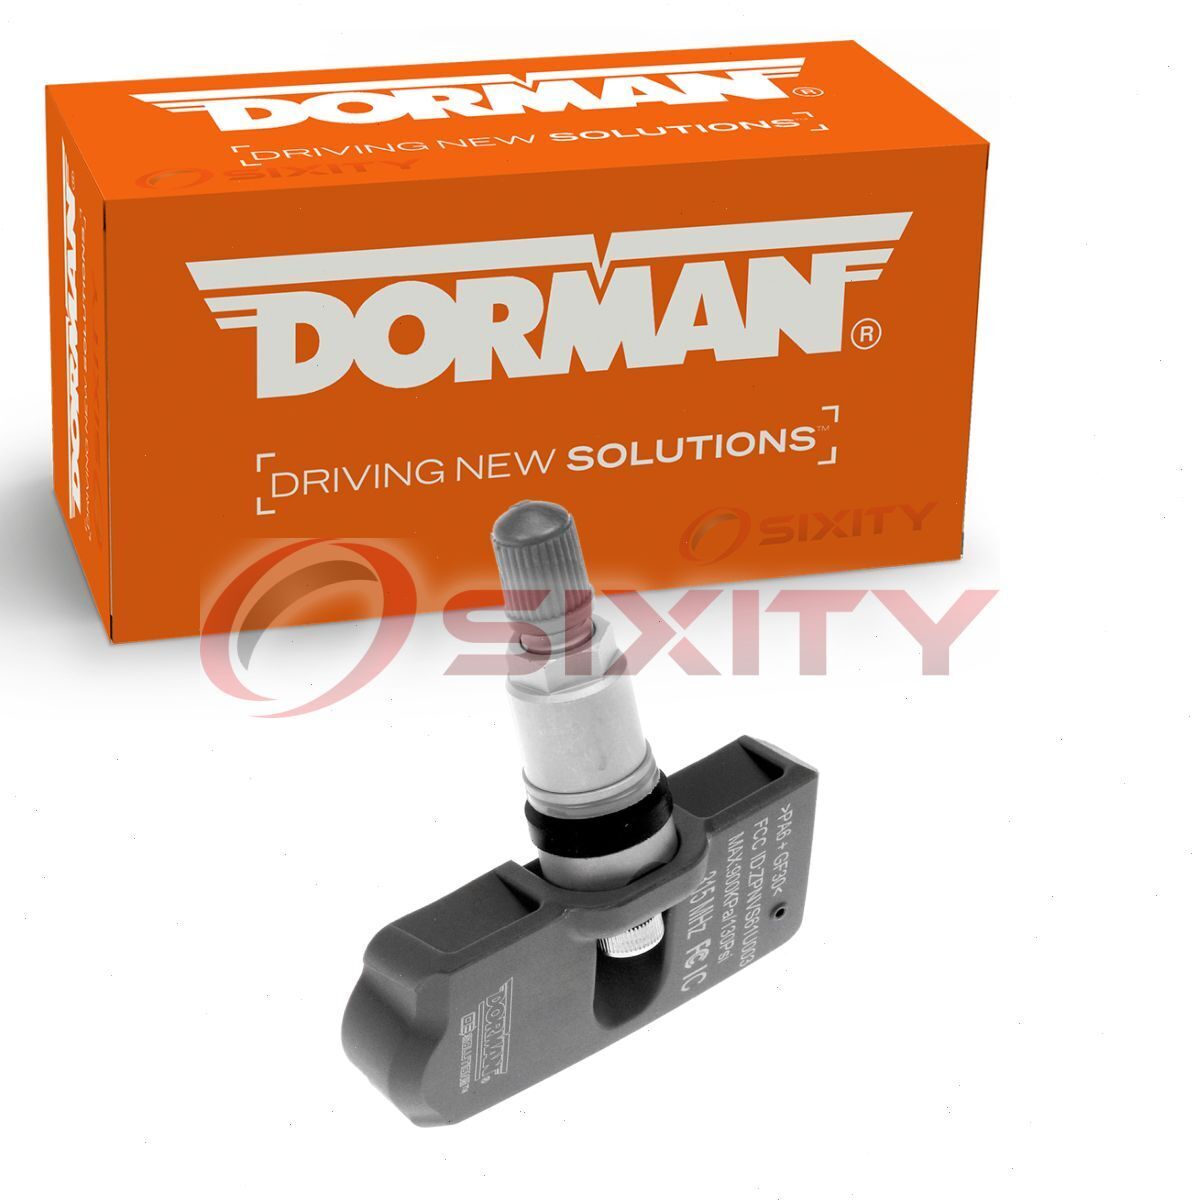 Dorman TPMS Programmable Sensor for 1999 BMW 323is Tire Pressure Monitoring yt